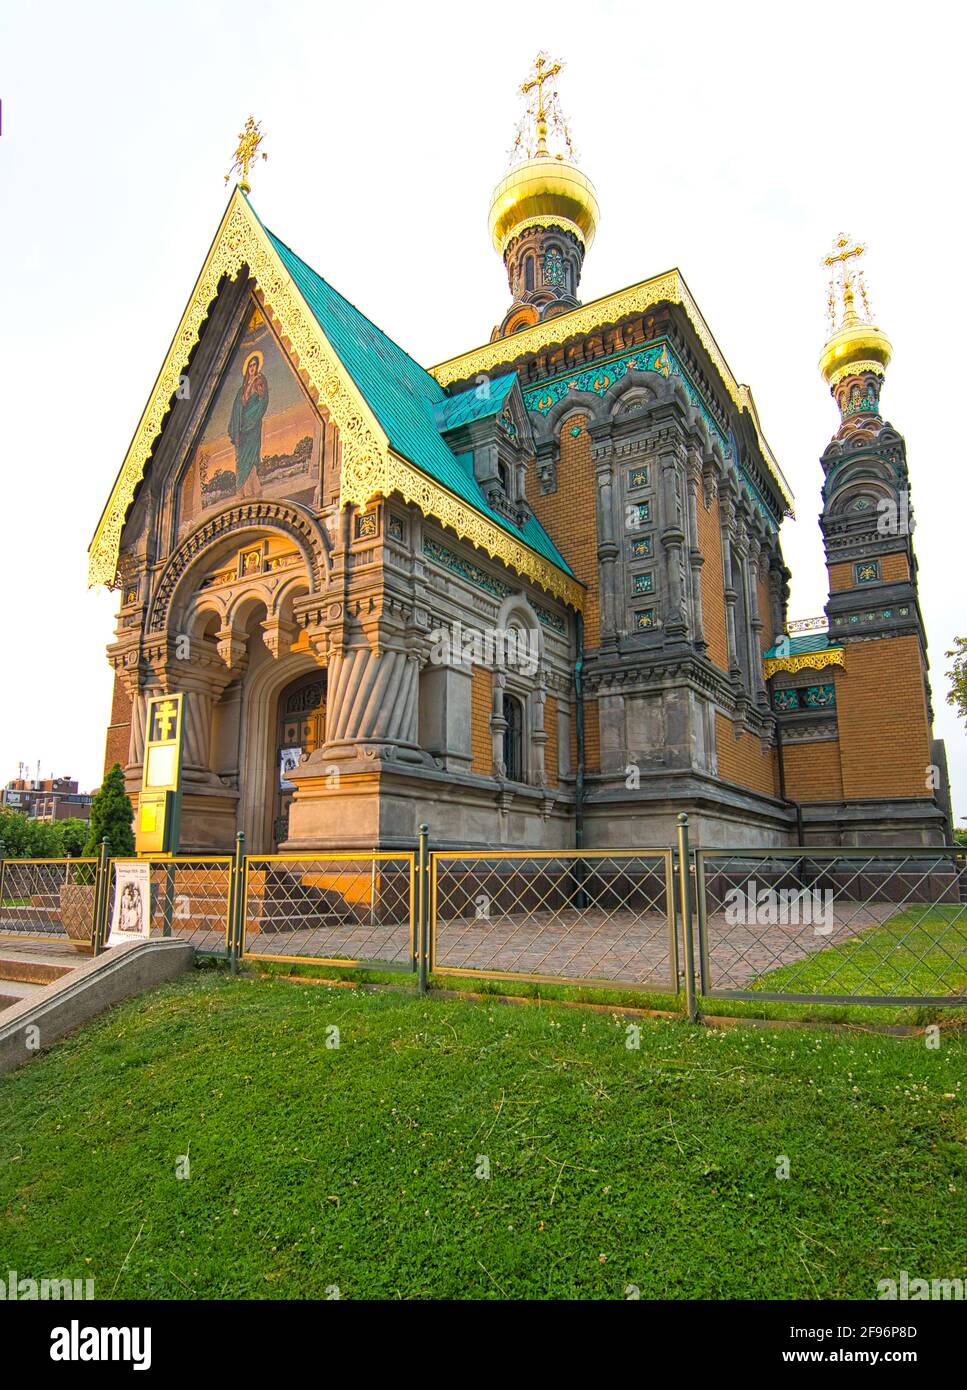 Eglise orthodoxe russe de Darmstadt en Allemagne. Russische Orthodoxe Kirche der hl. Maria Magdalena Darmstadt. Lieux à visiter. Banque D'Images